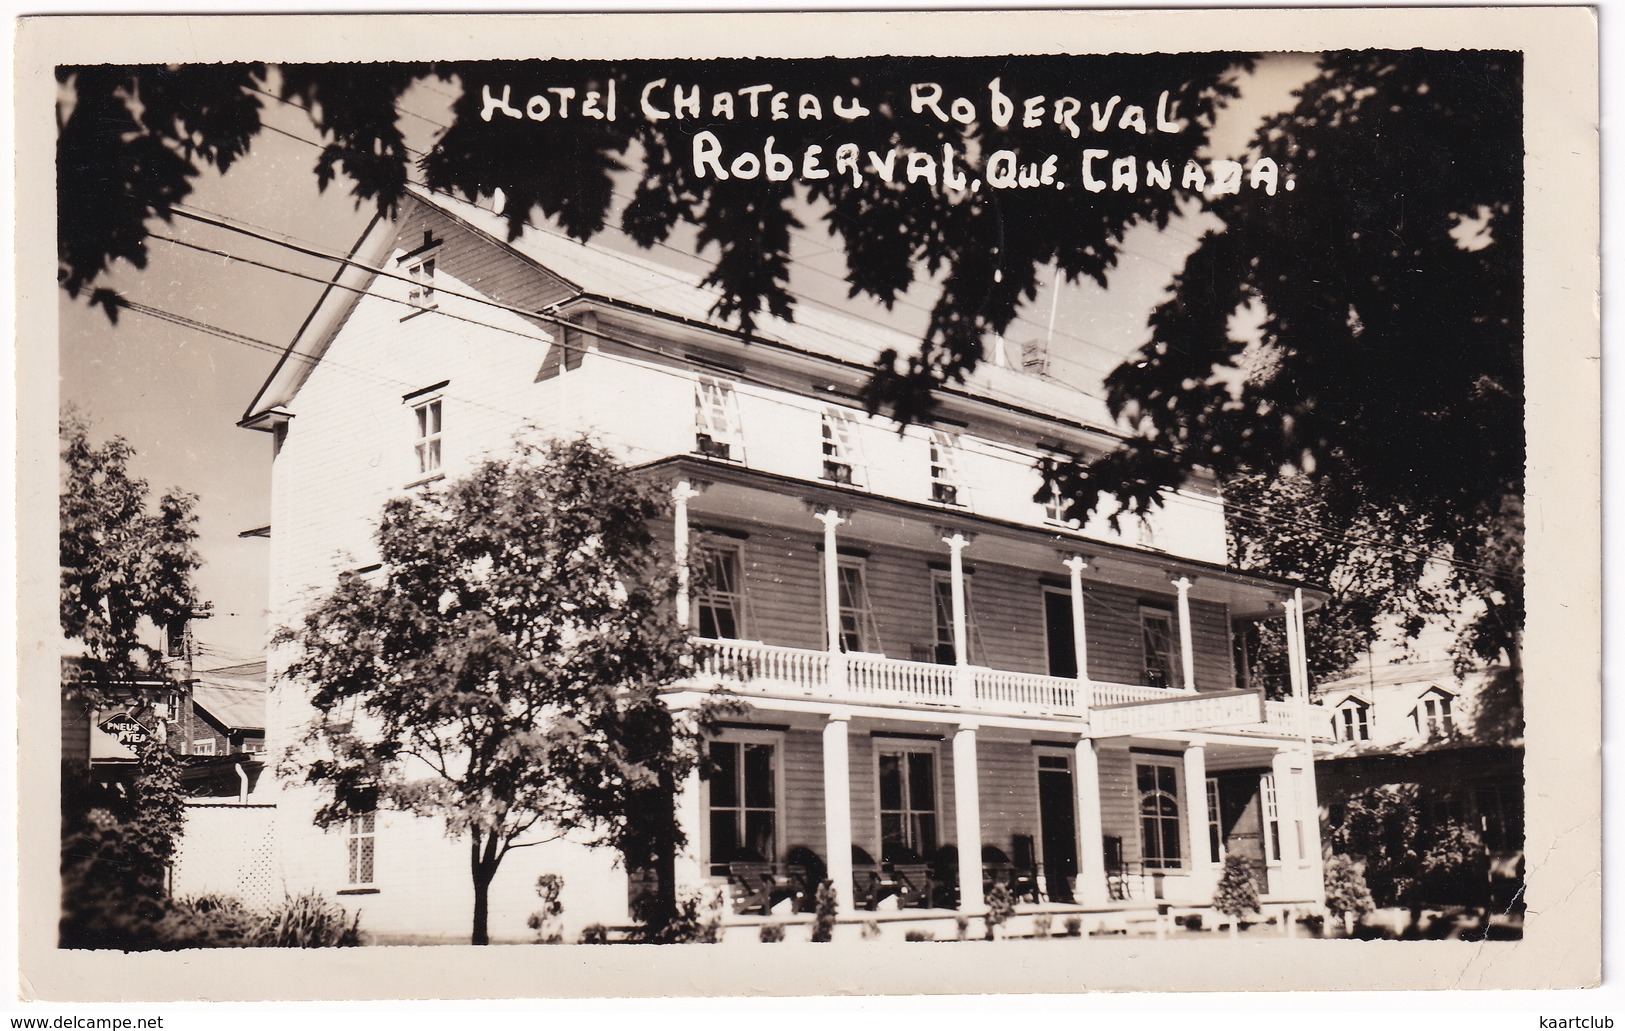 Roberval - Hotel Chateau 'Roberval'  - (Québec, Canada) - 1953 - Saguenay